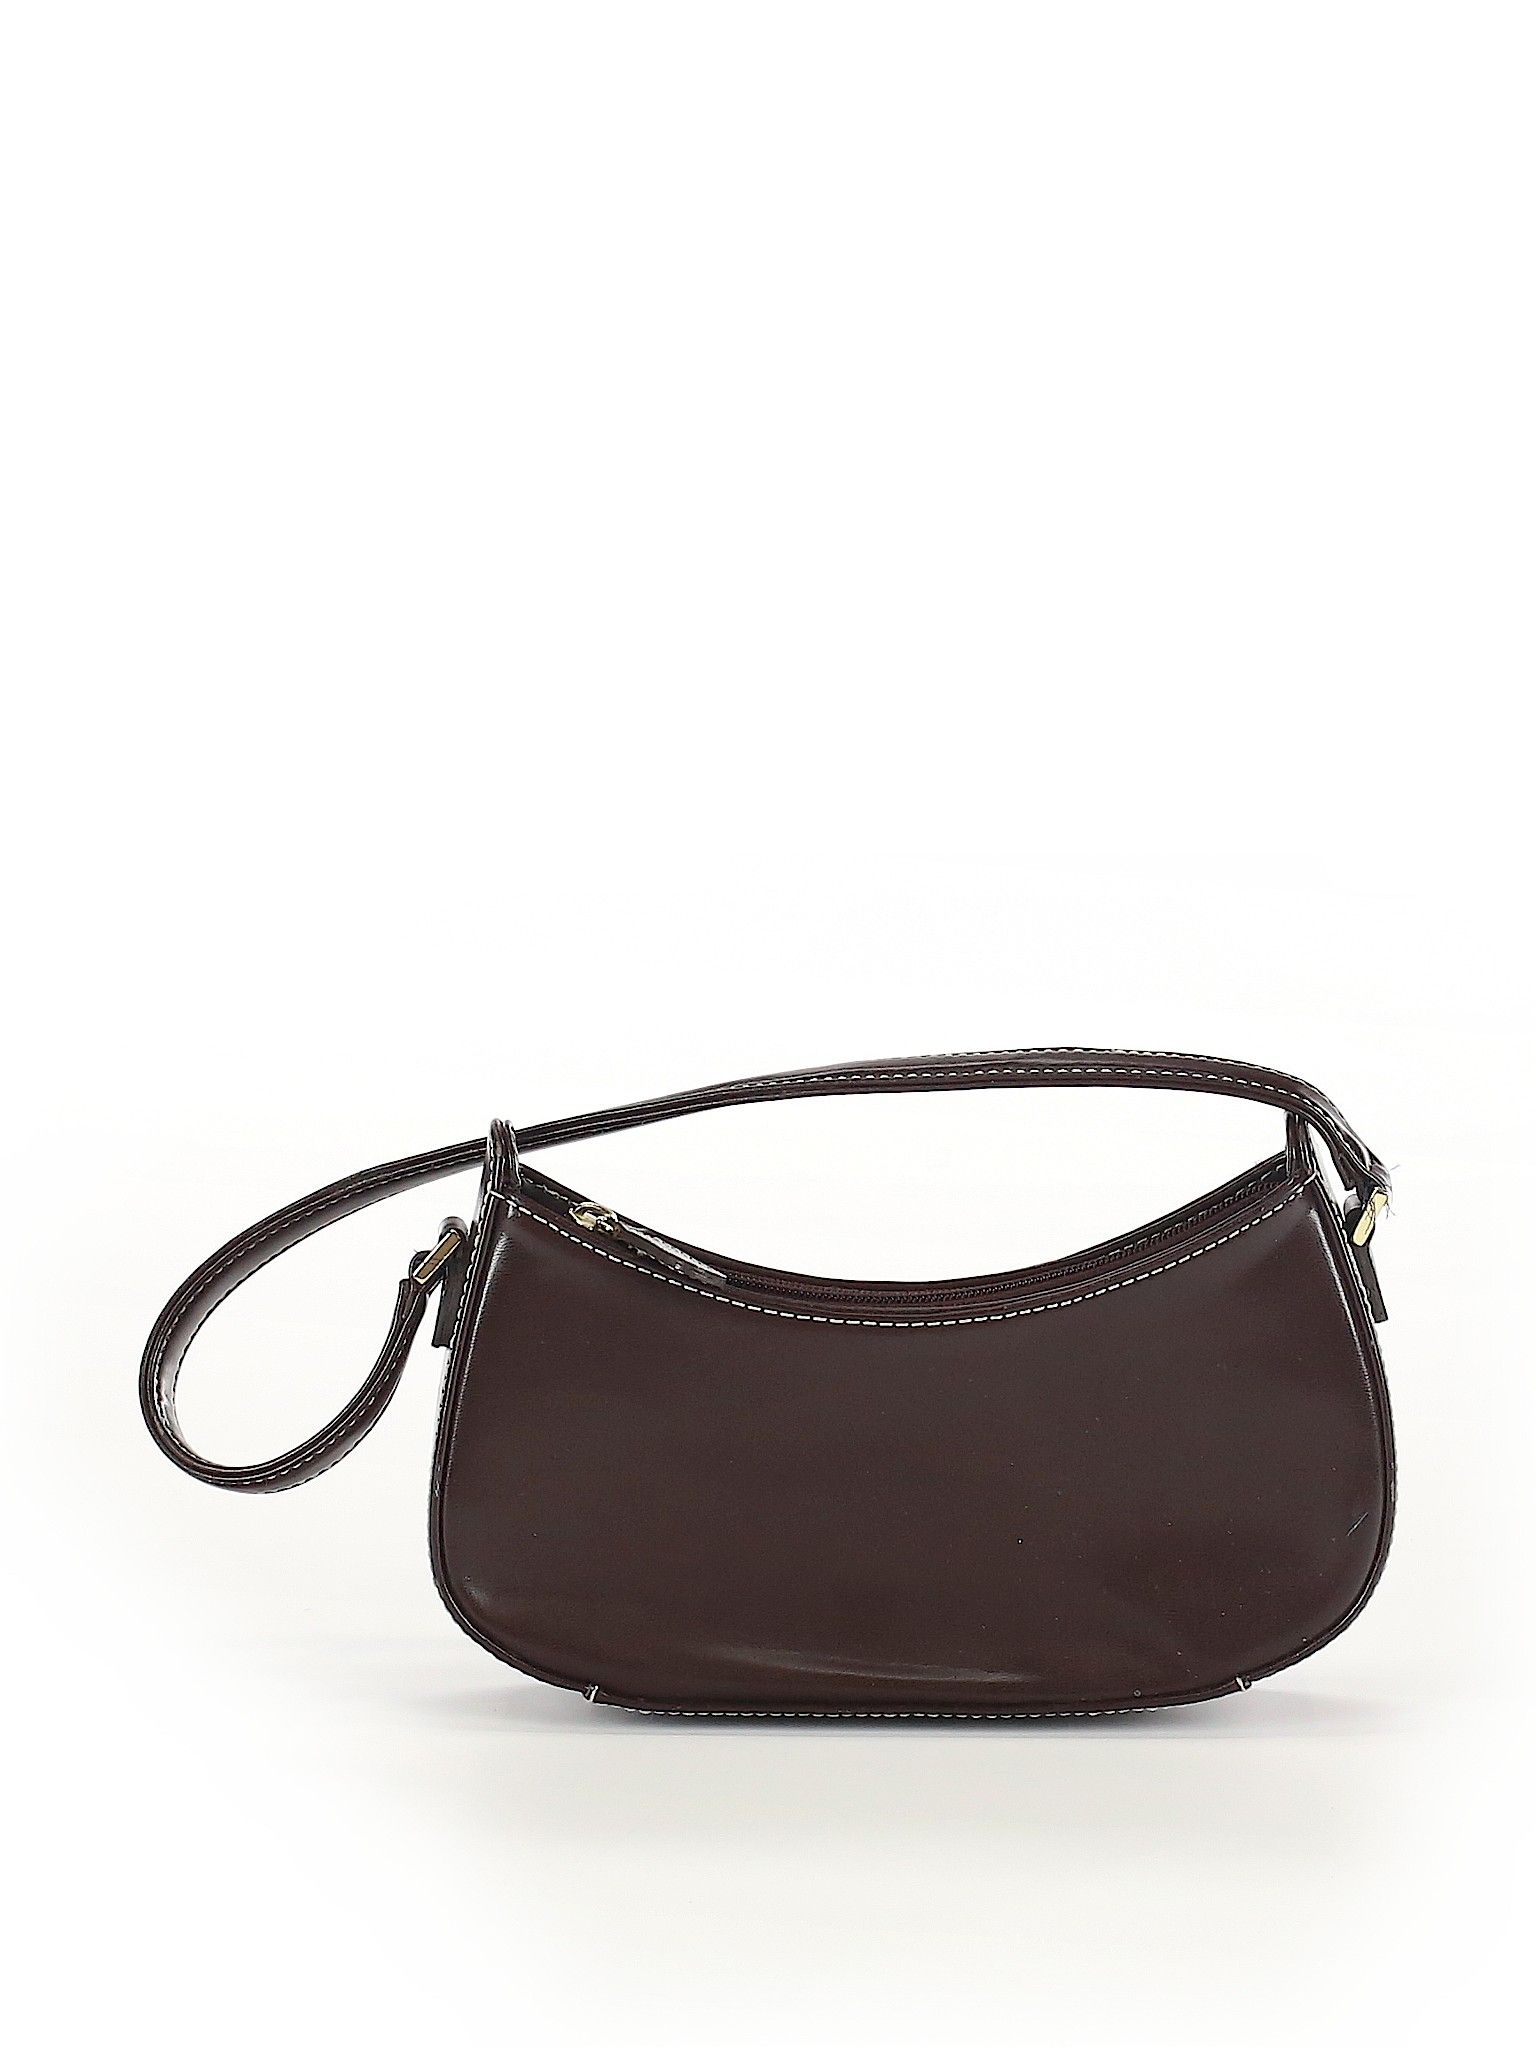 Liz Claiborne Accessories Shoulder Bag Size NA: Brown Women's Bags - 36925346 | thredUP